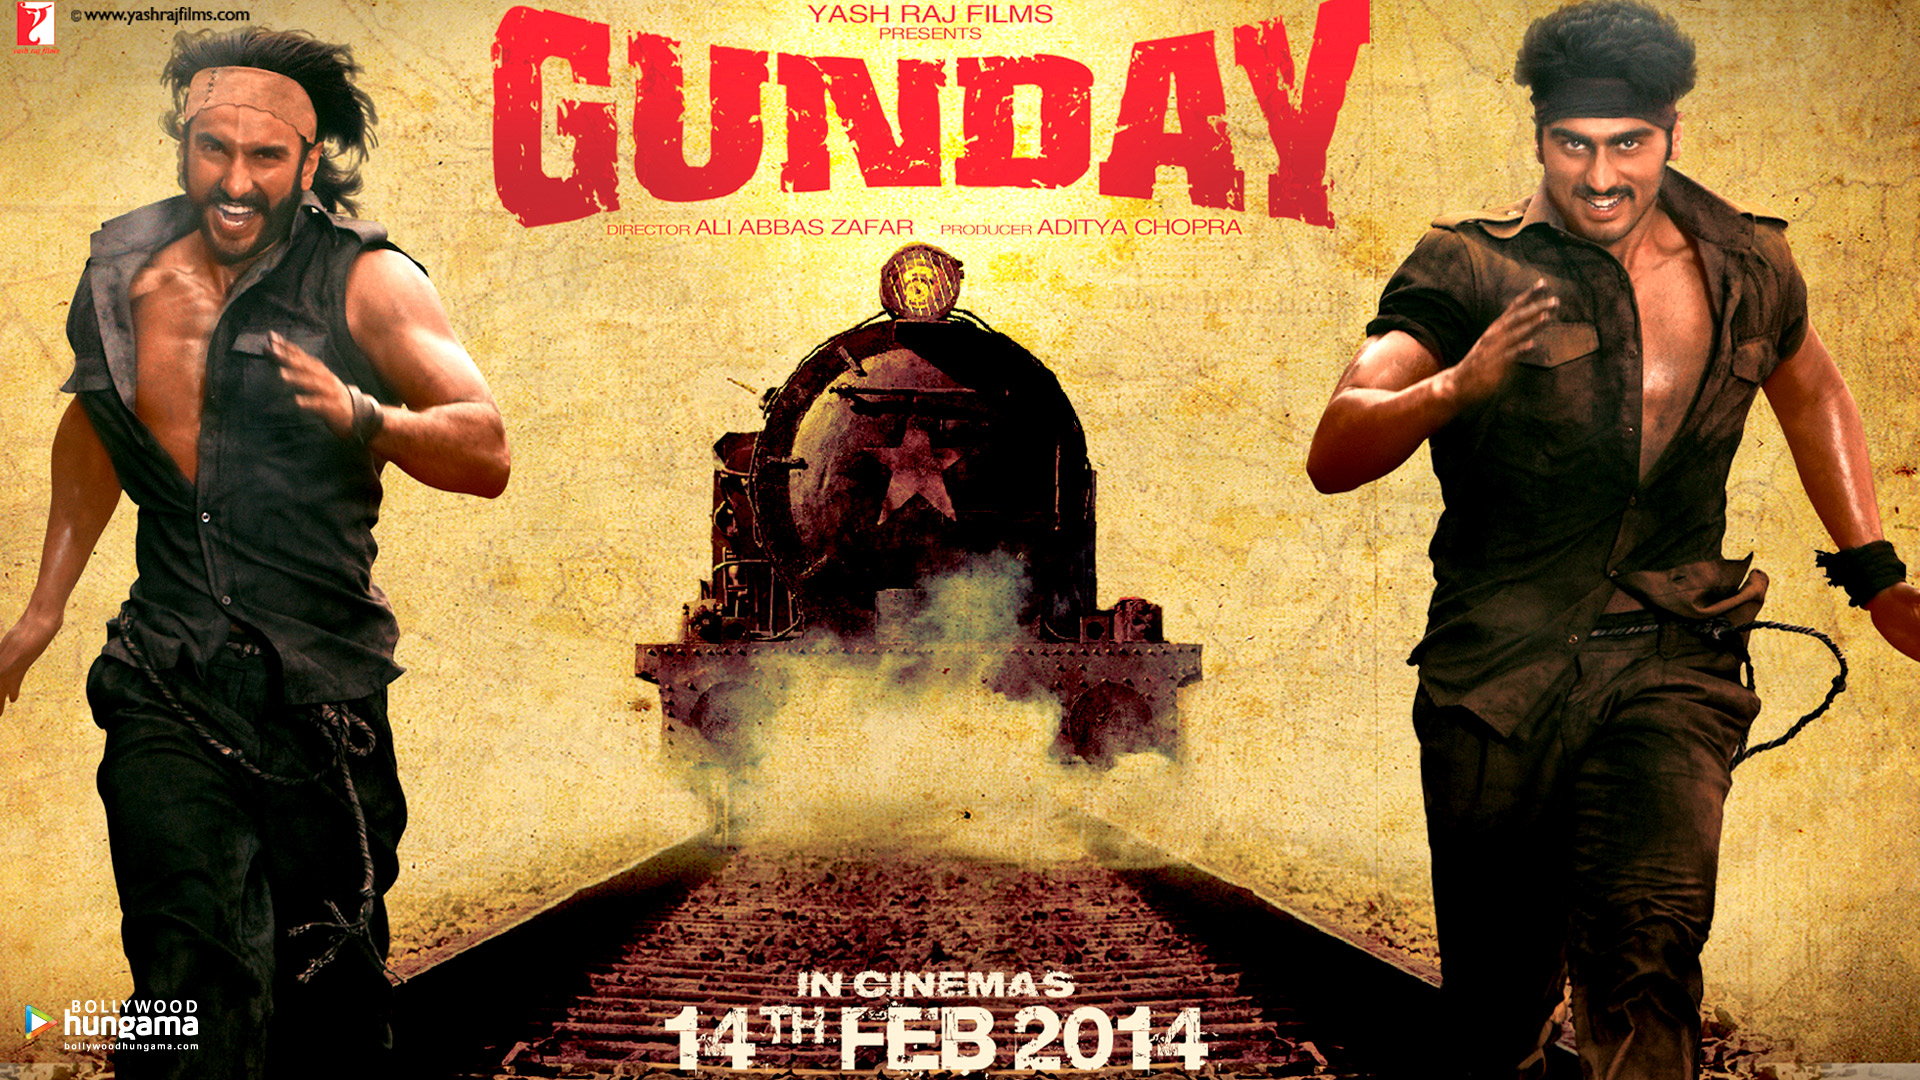 Gunday wallpaper  1024x768  Indya101com